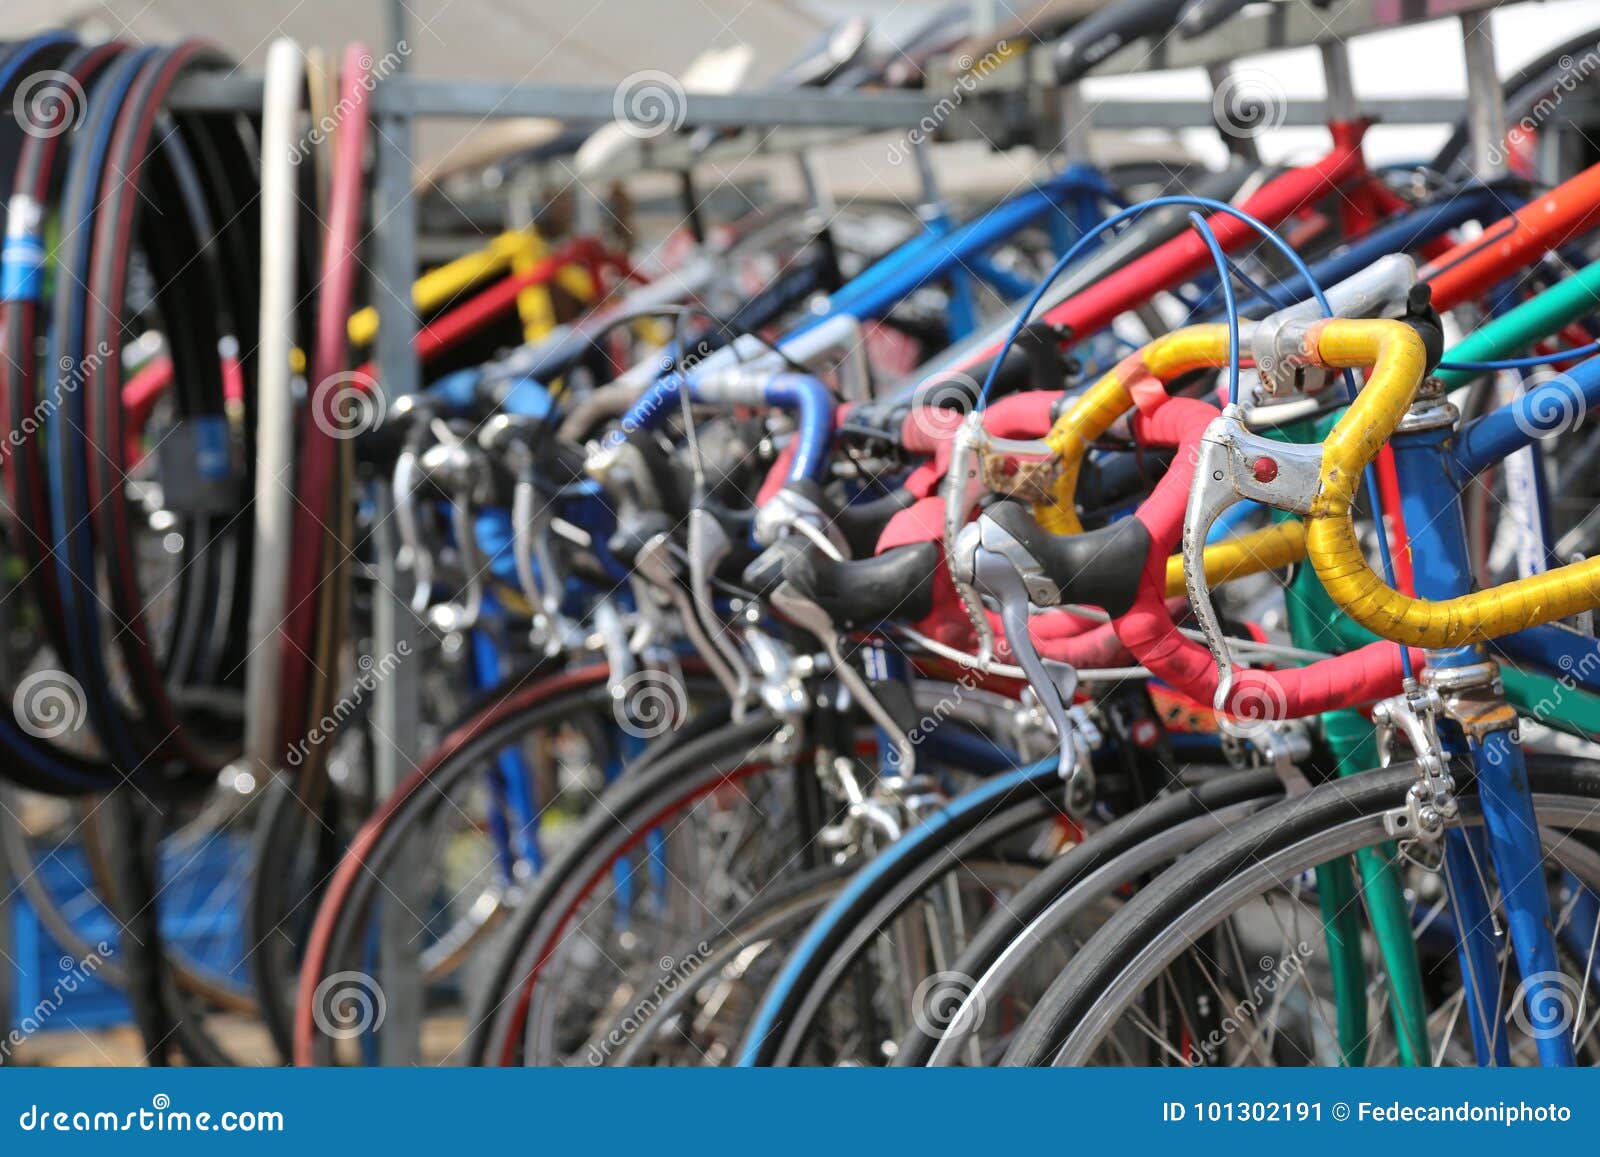 Used Bikes Sale Stock Photos